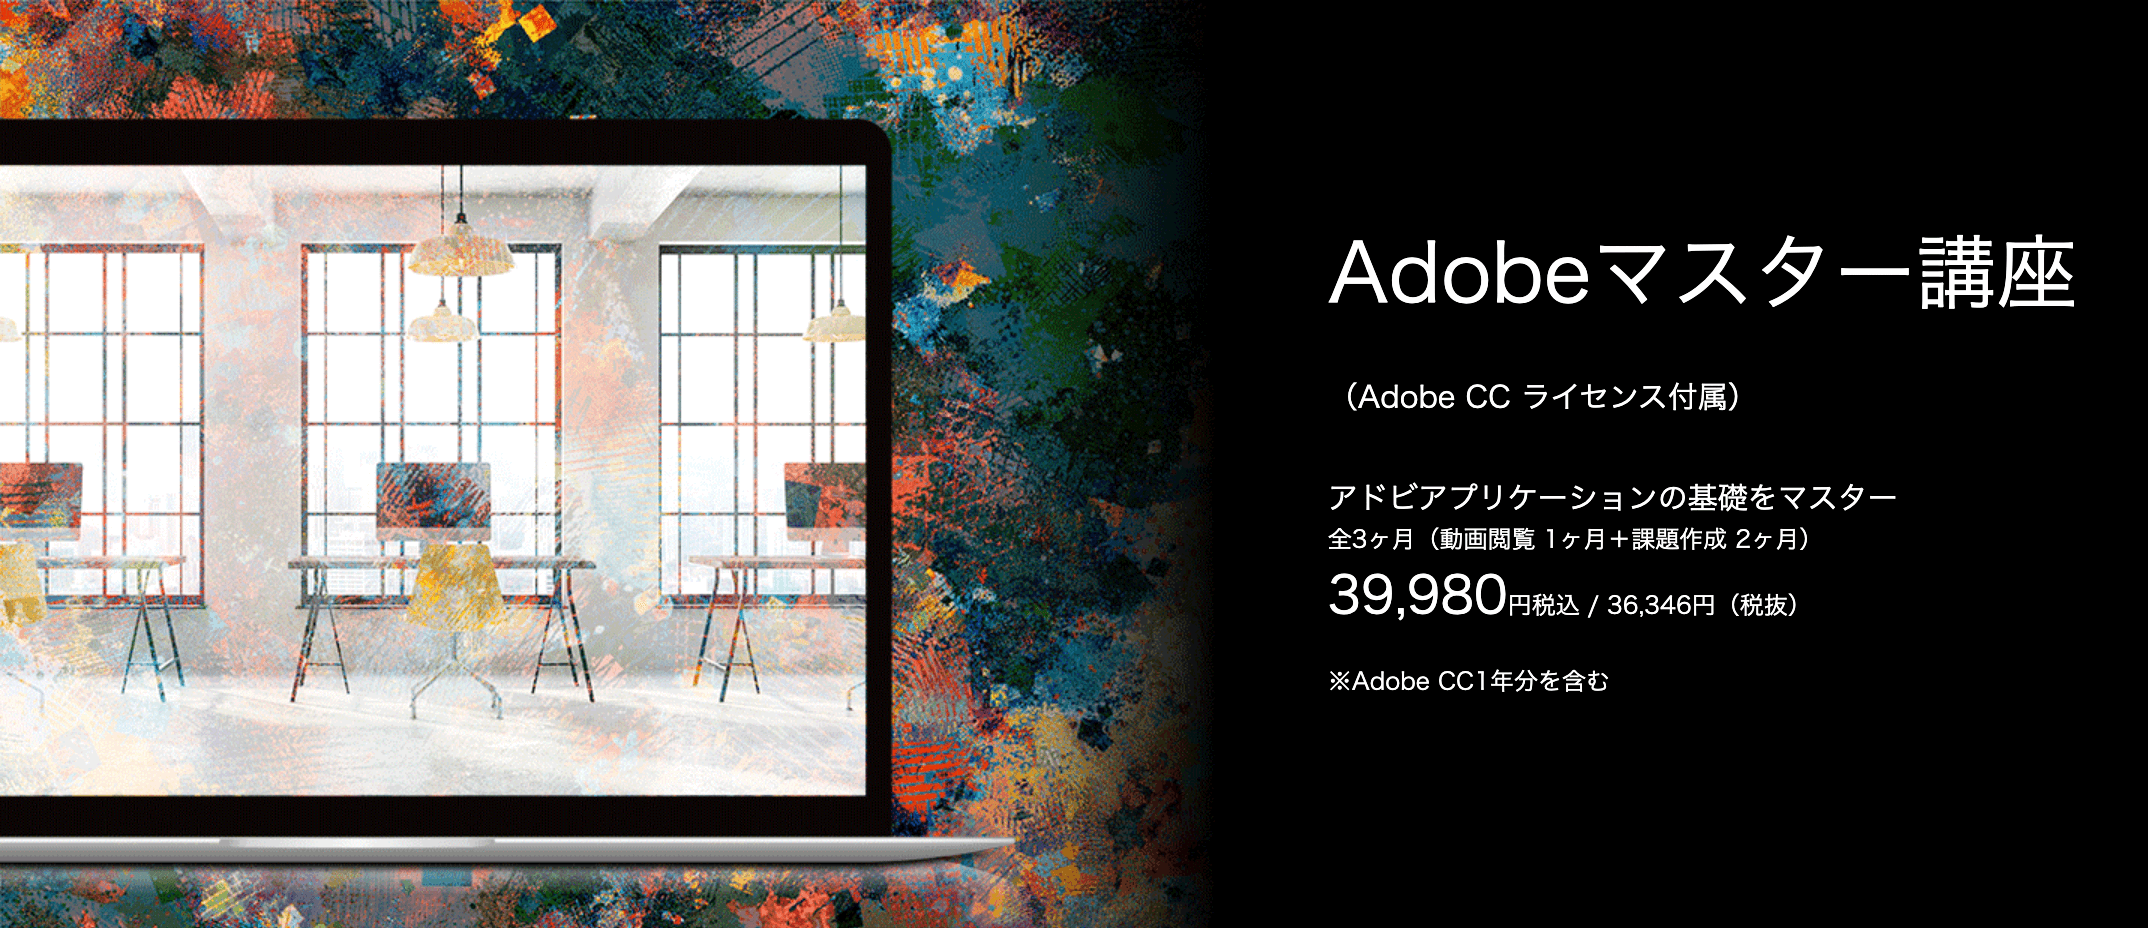 Adobeマスター講座
（Adobe CC ライセンス付属）
Adobeアプリケーションの基礎をマスター
全3ヶ月（動画閲覧1ヶ月＋課題作成2ヶ月）
39,980円税込／36,346円（税抜）
※Adobe CC1年分を含む